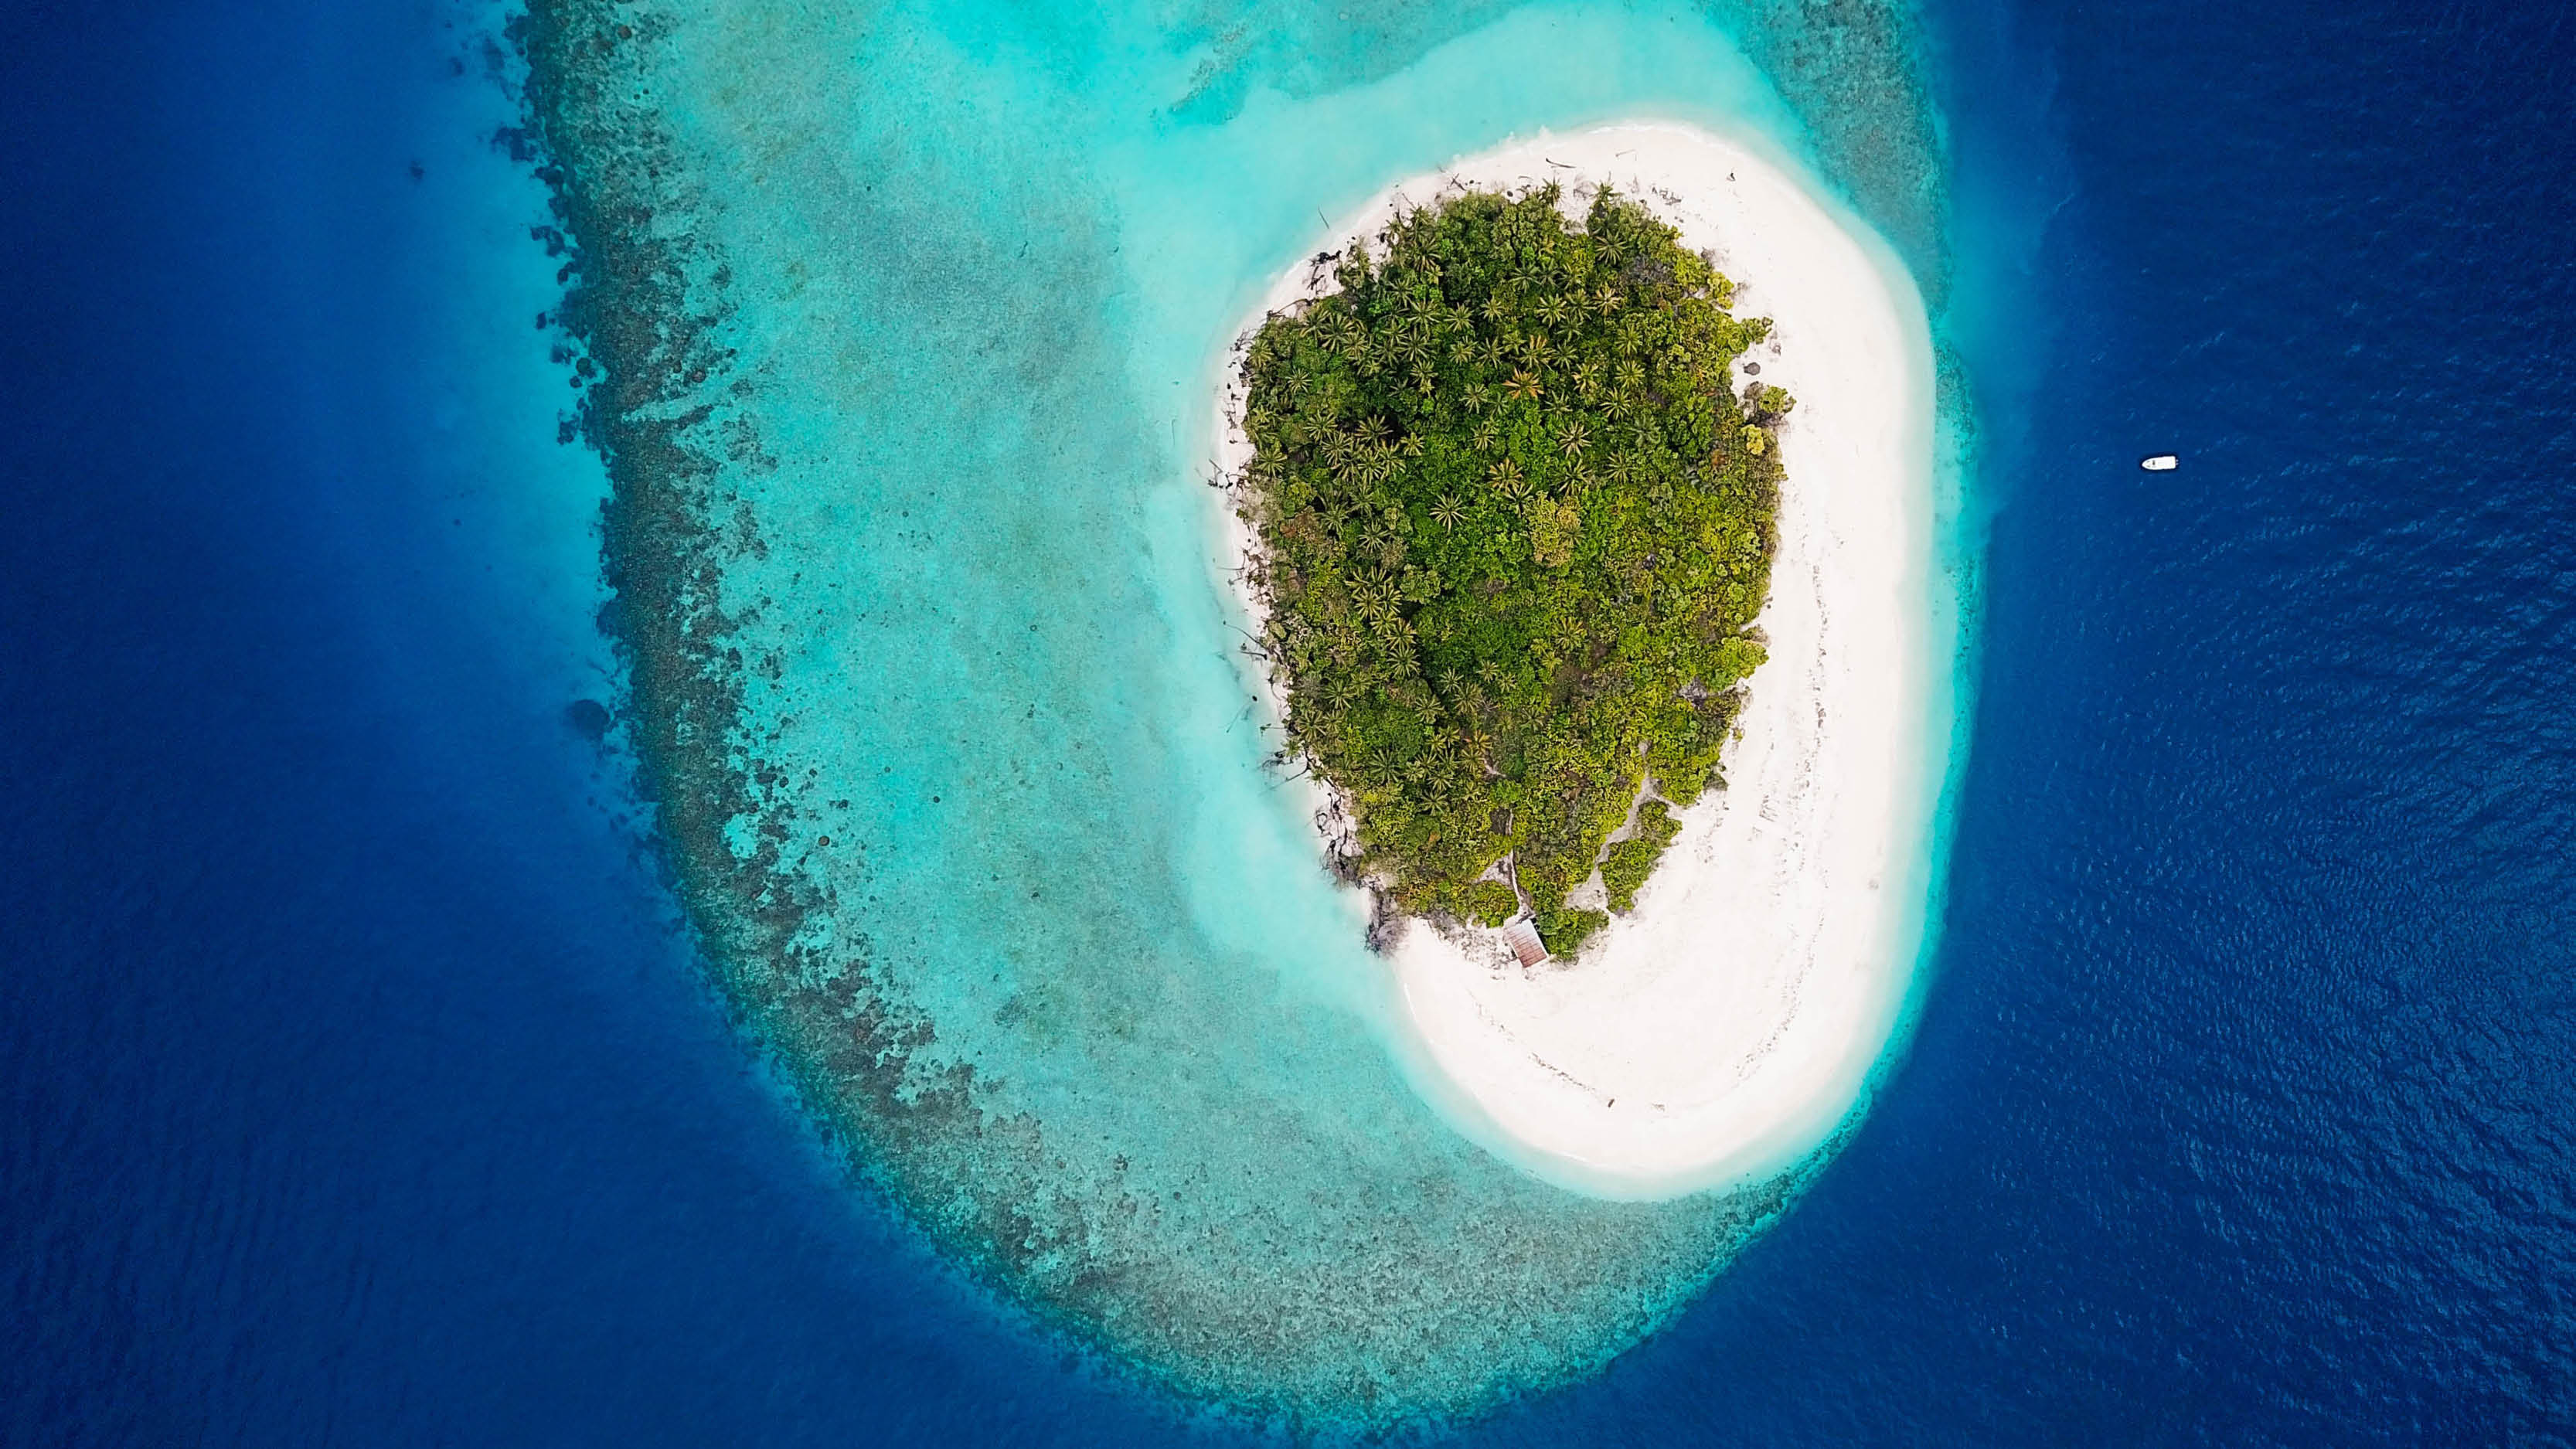 Maldives island - last-minute holiday